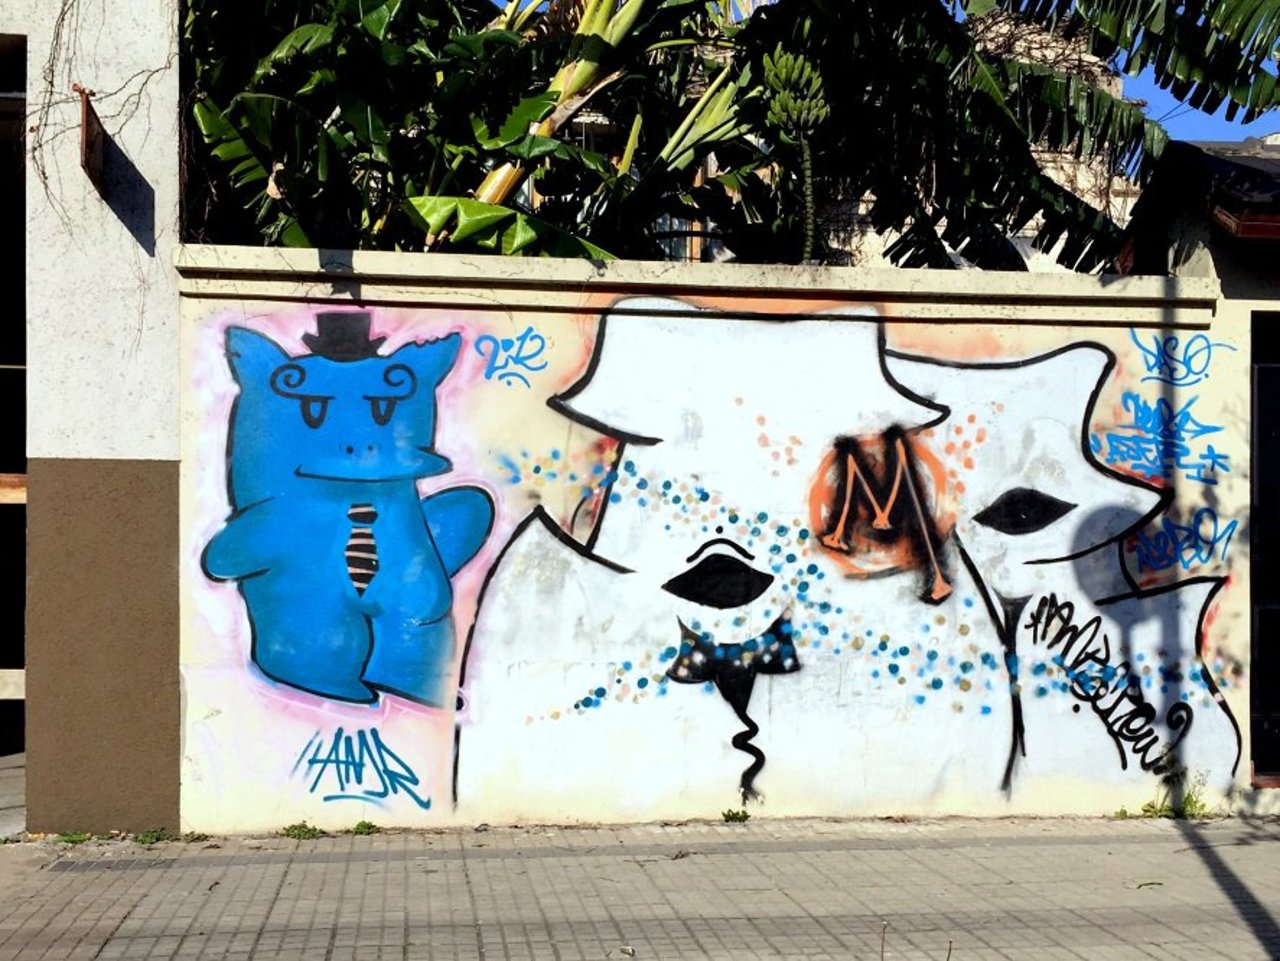 #Graffiti de hoy: << El oso azul >> Calle 9, 67y68 #LaPlata #Argentina #StreetArt #UrbanArt #ArteUrbano https://t.co/5uc7CEyQPG